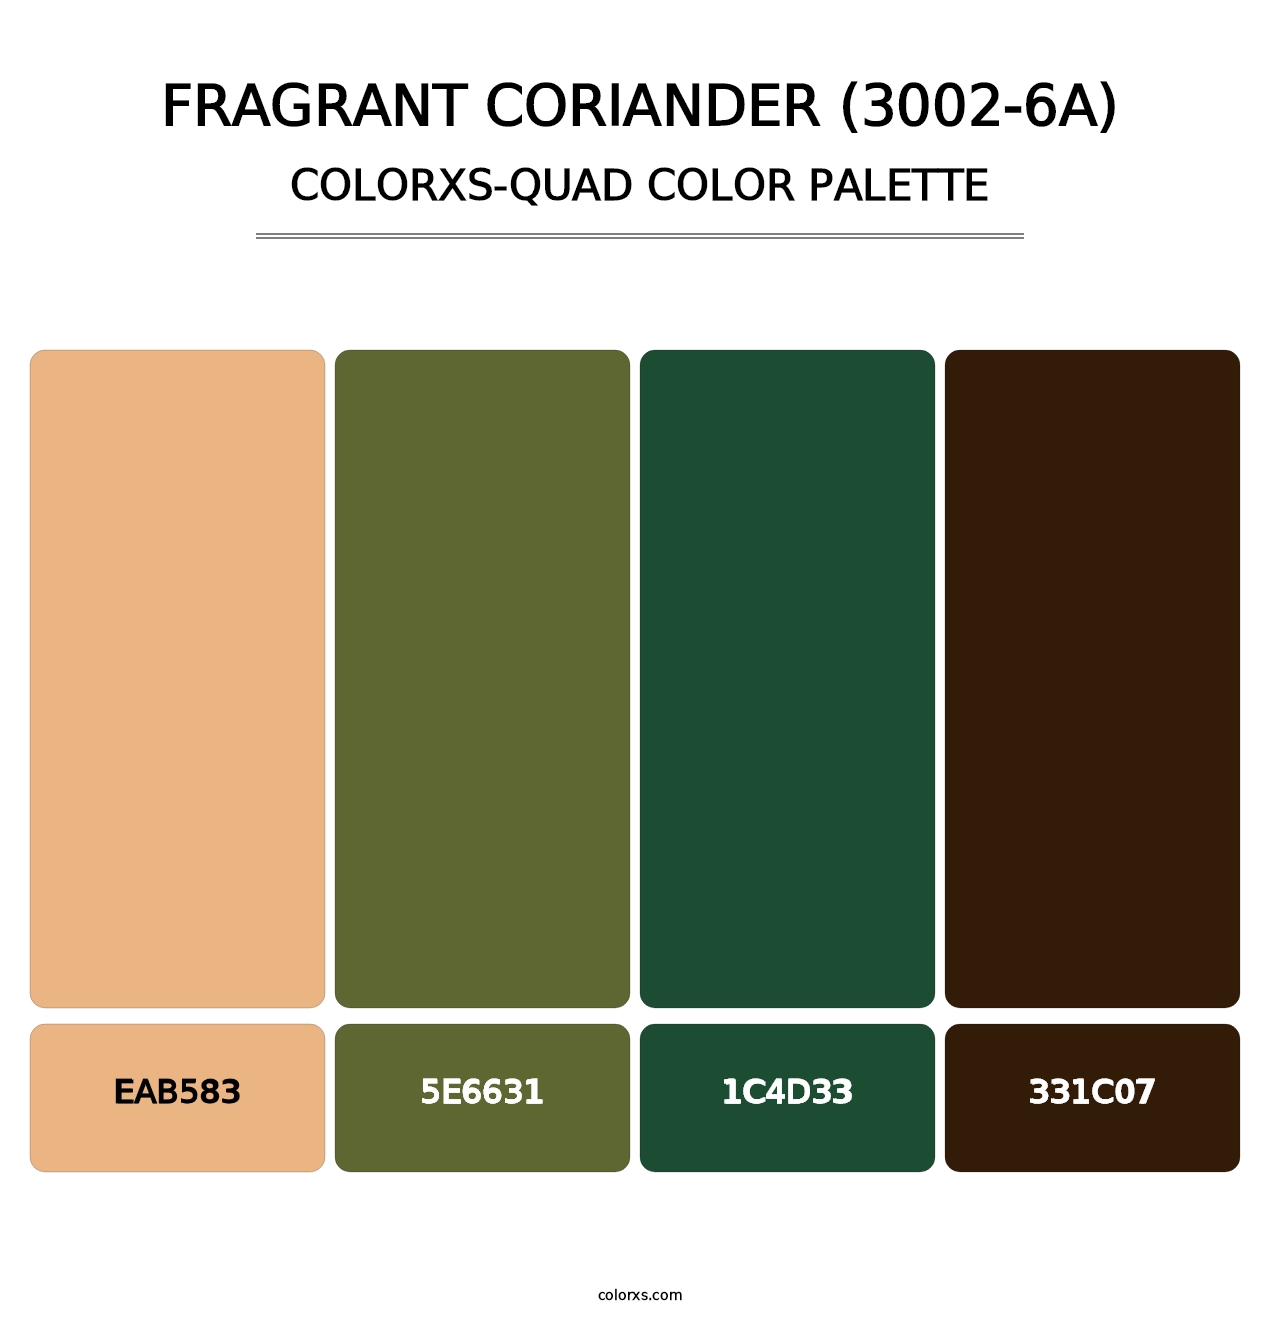 Fragrant Coriander (3002-6A) - Colorxs Quad Palette